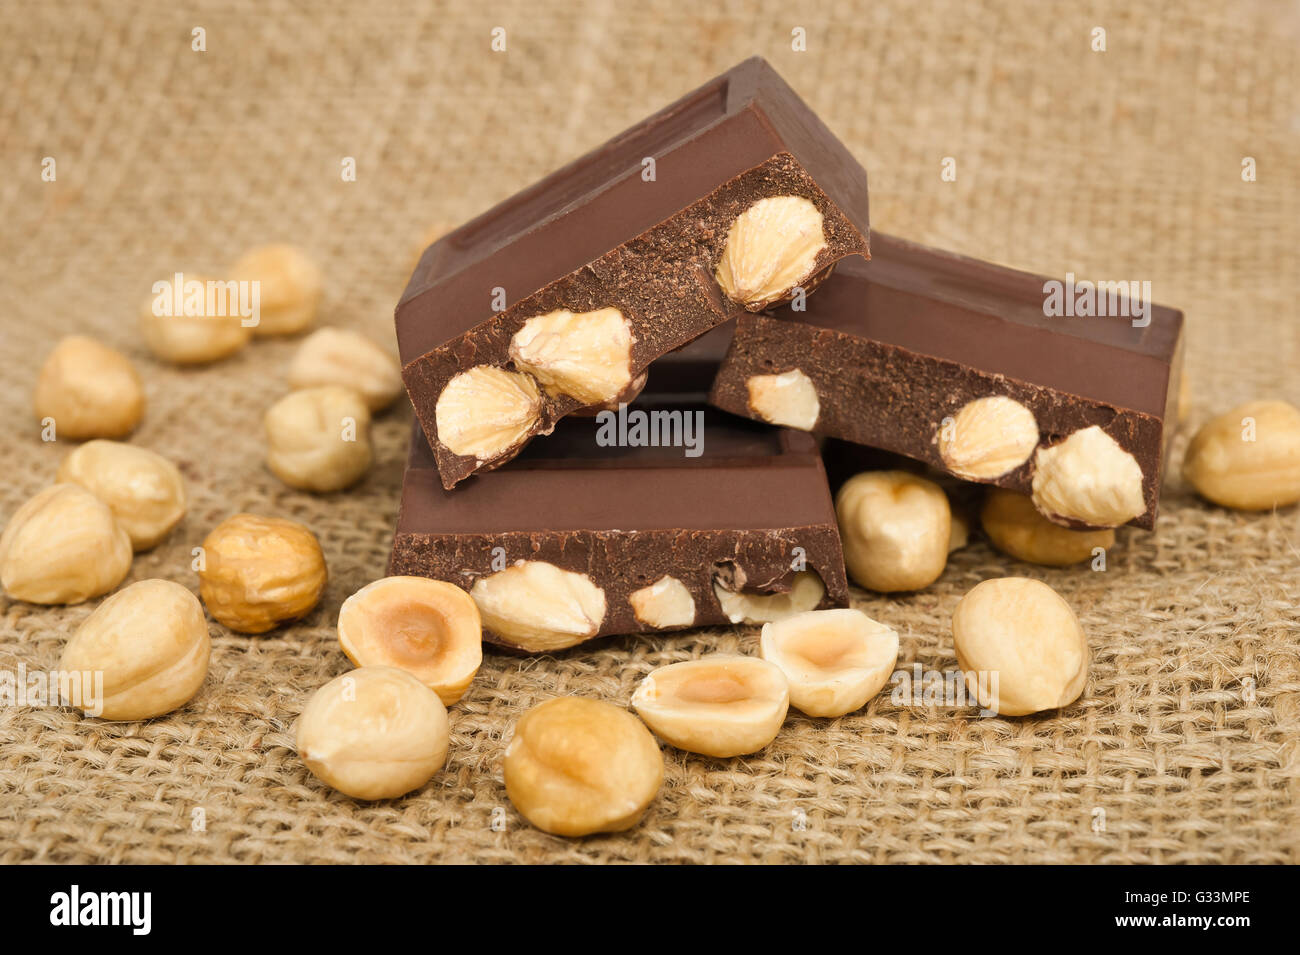 Bar of chocolate with hazelnuts Stock Photo